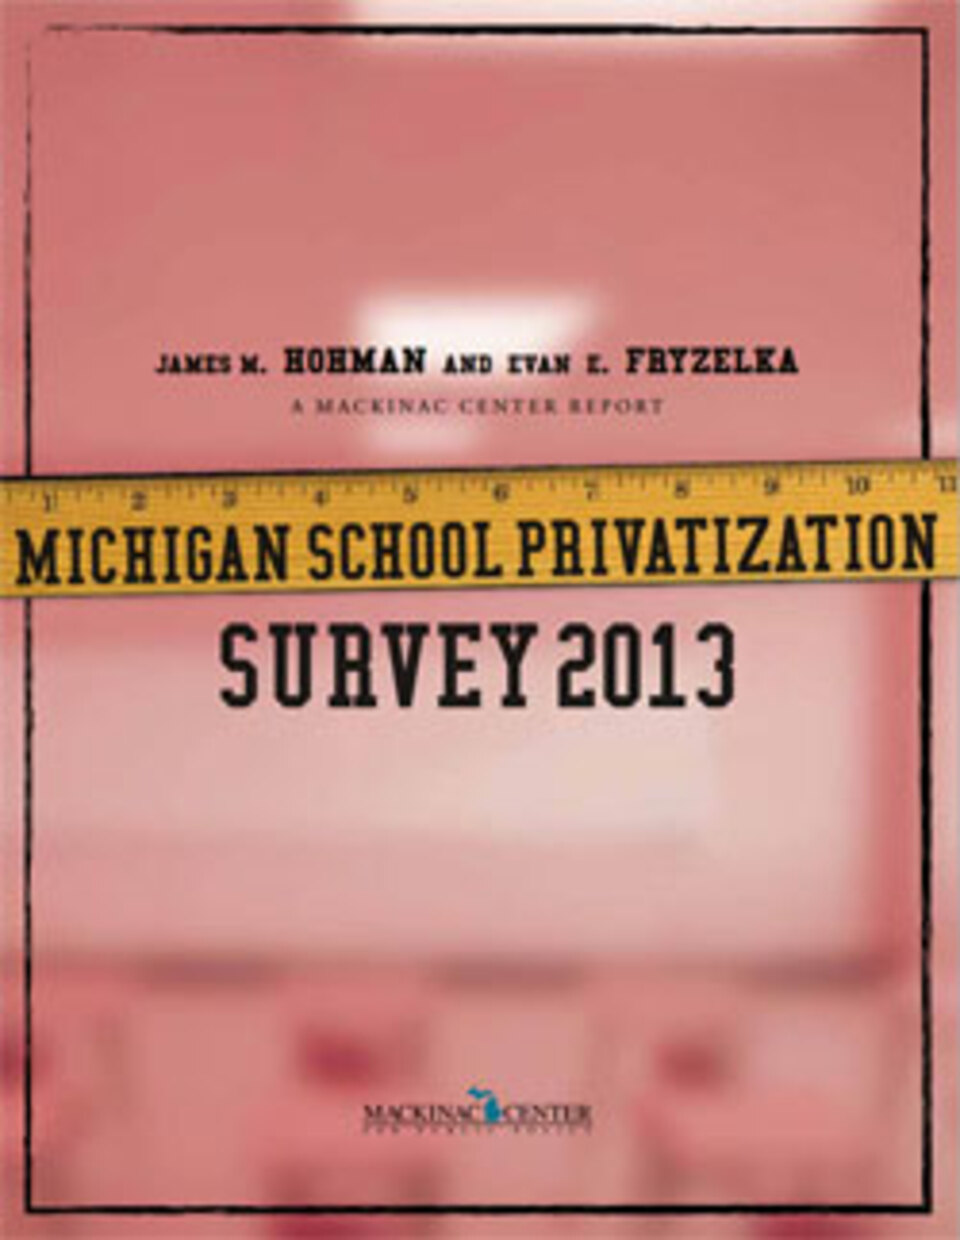 Michigan School Privatization Survey 2013 Mackinac Center